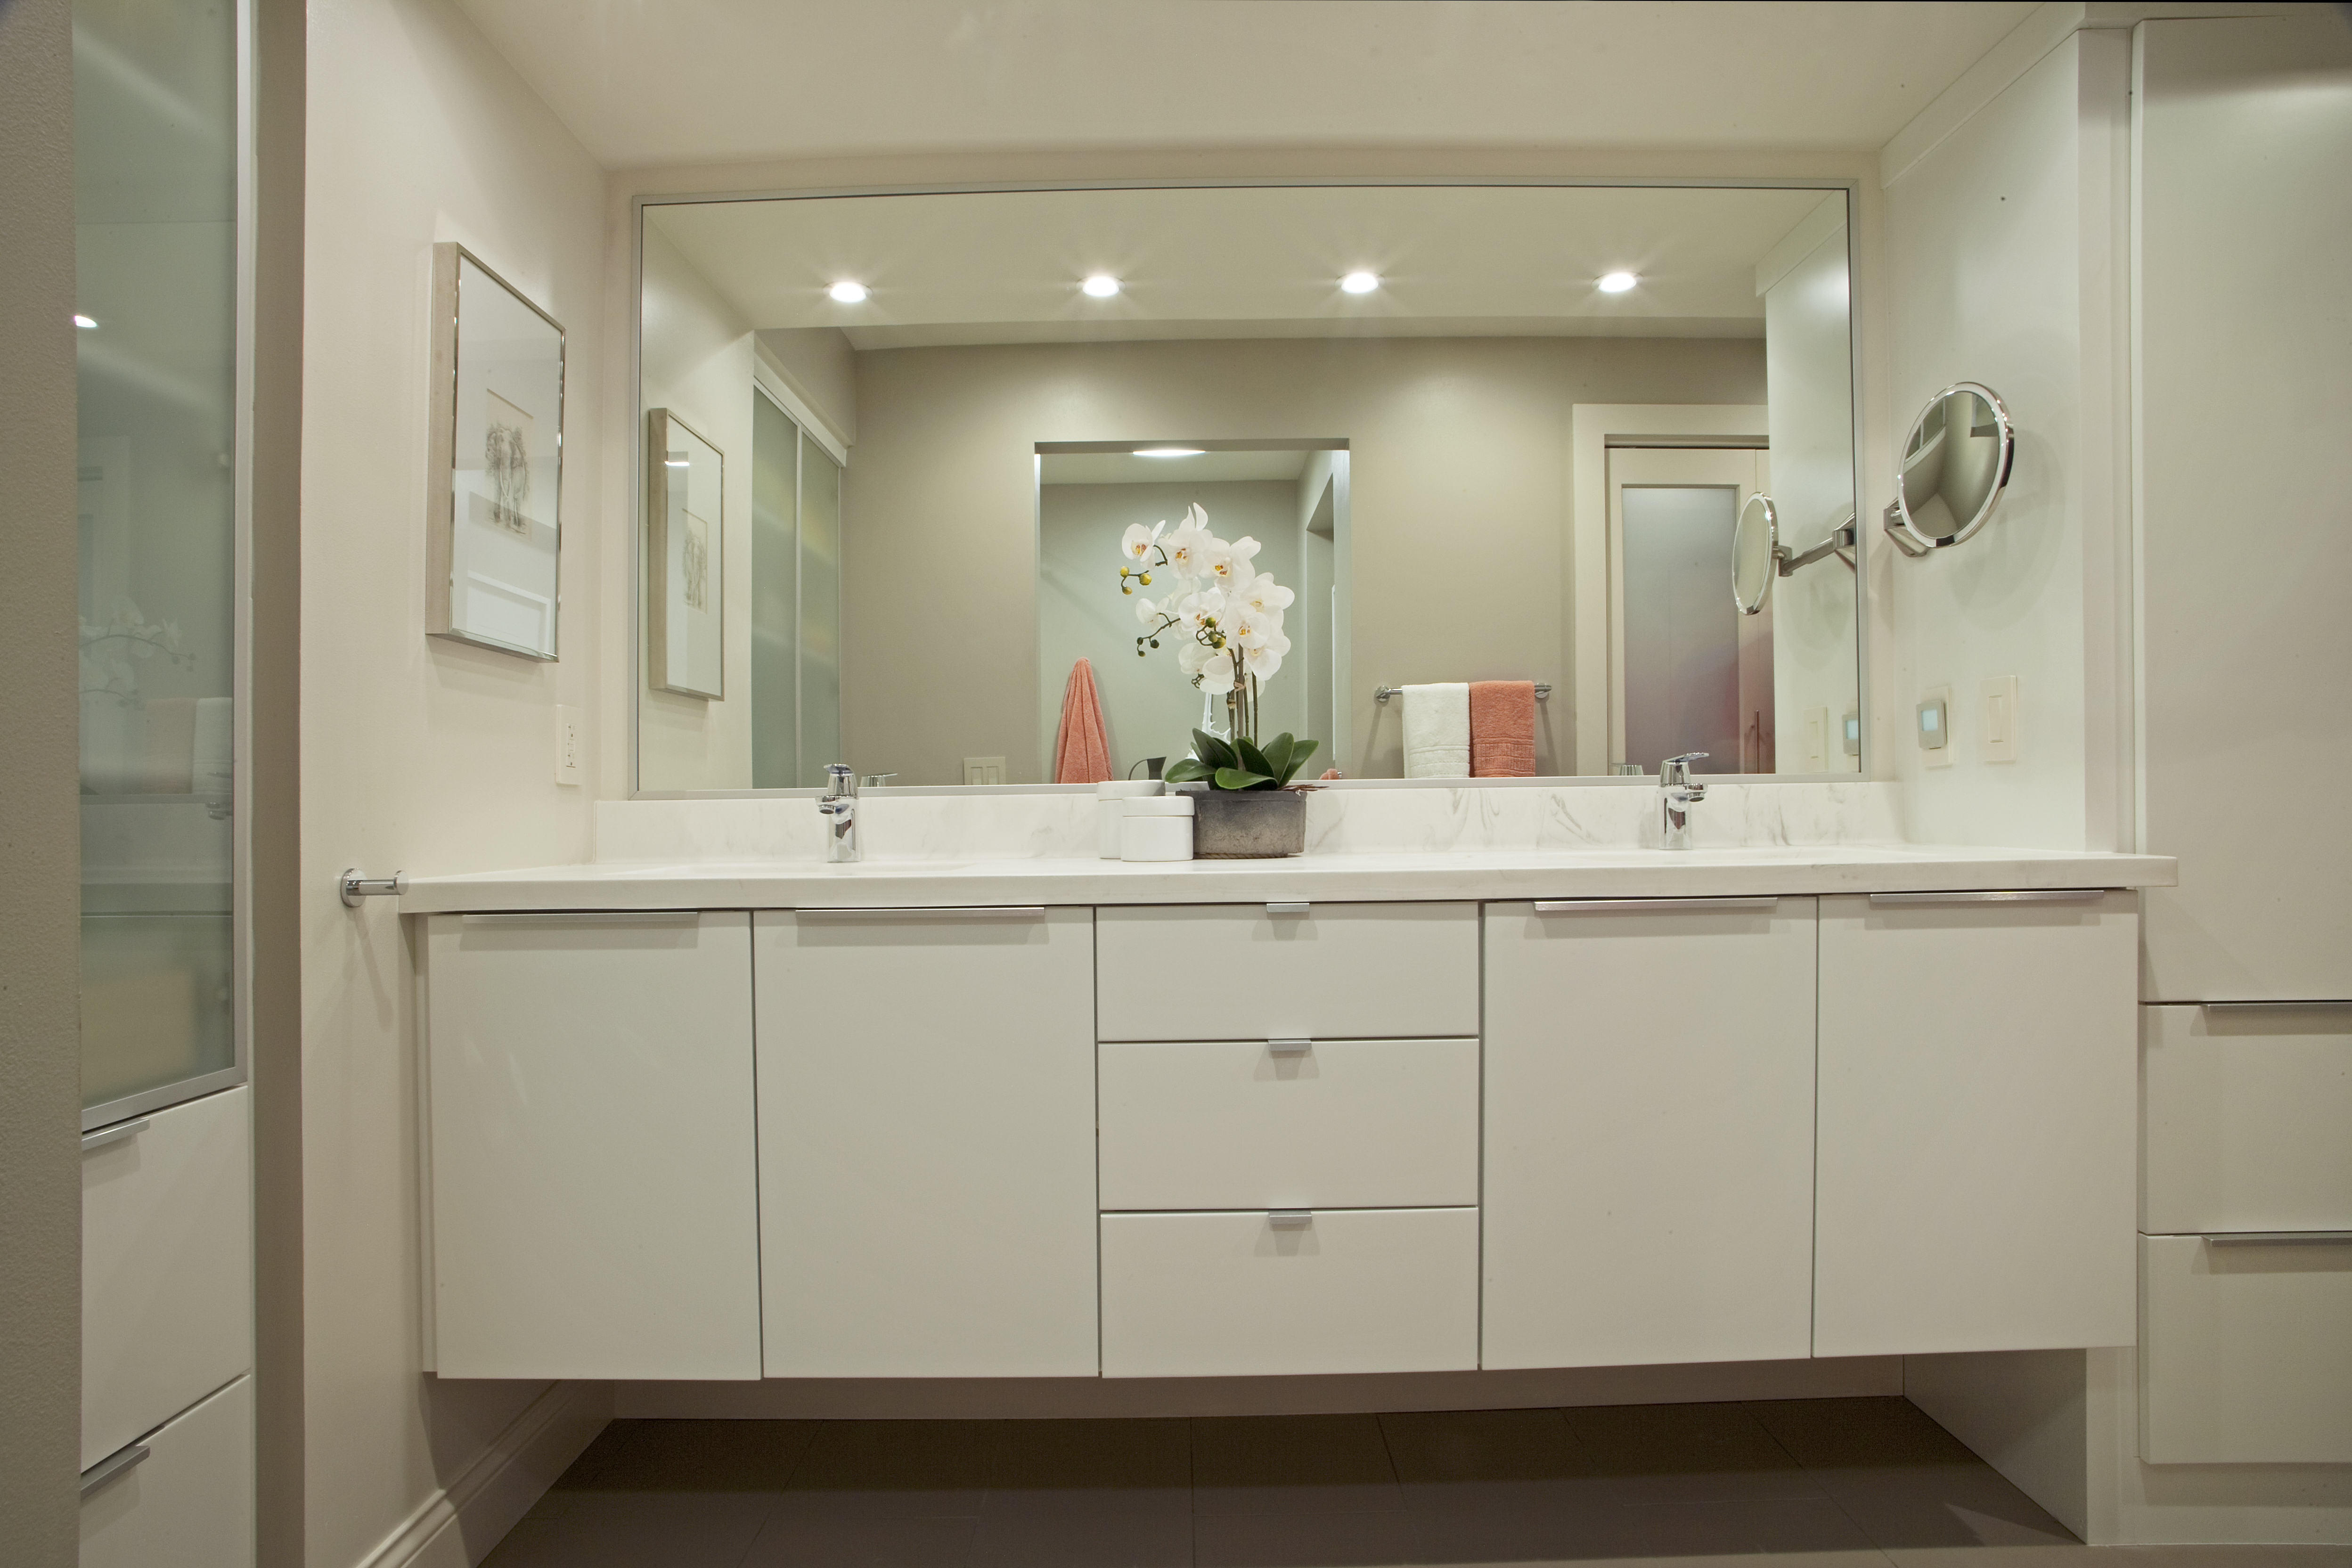 A fresh all-white, contemporary bathroom design by Dan Luck of Bella Domicile featuring Dura Supreme Cabinetry.